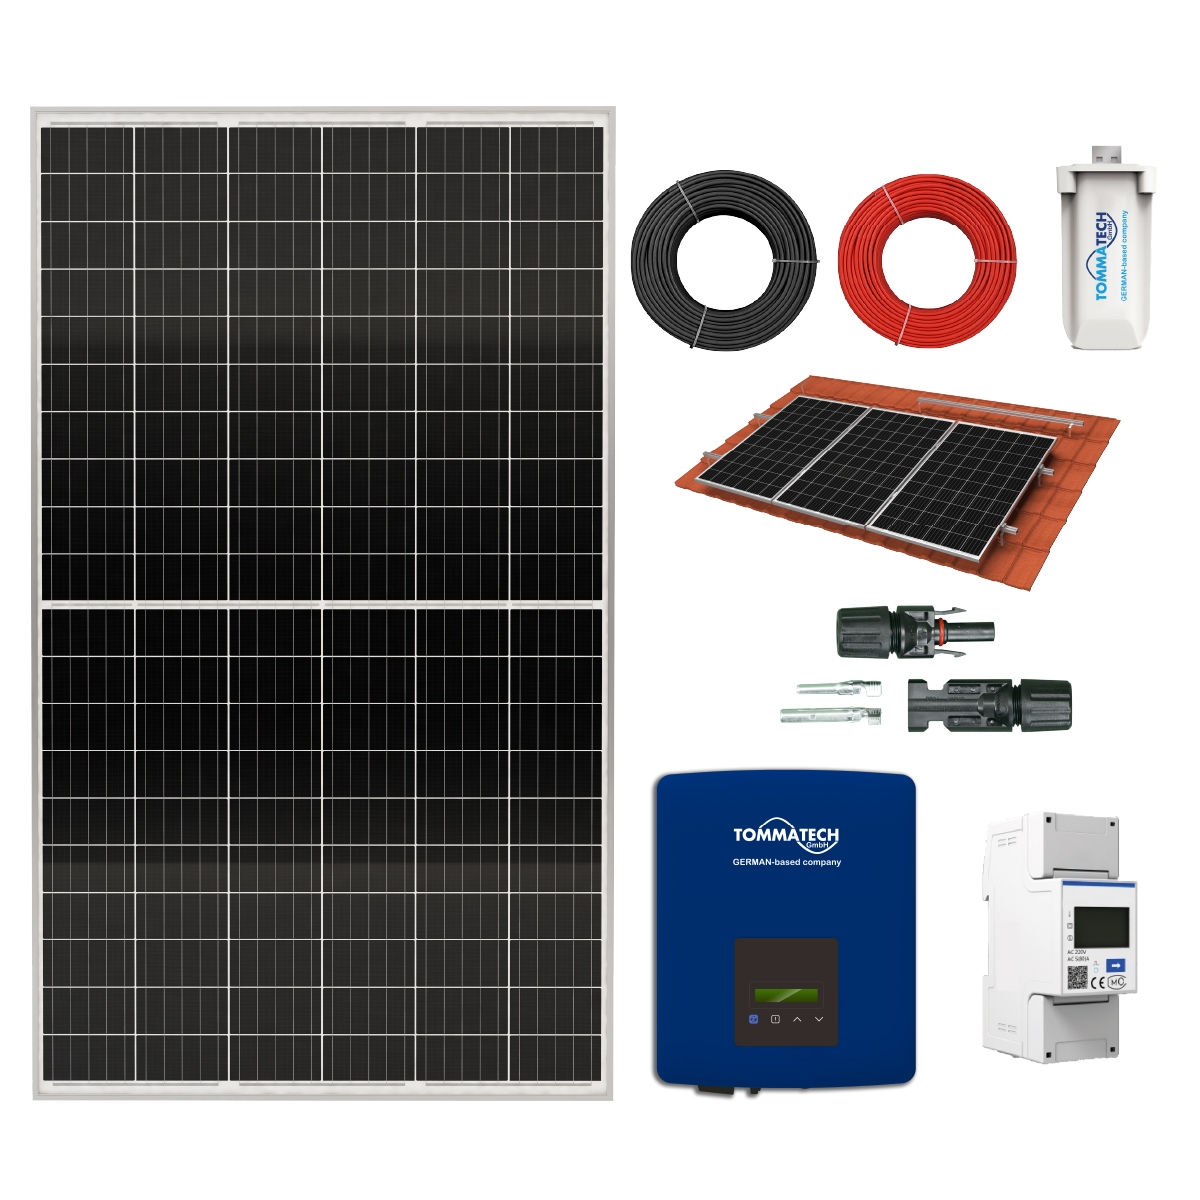 0.7kW / 0.76kWp Solar On-Grid Plug & Play Solution